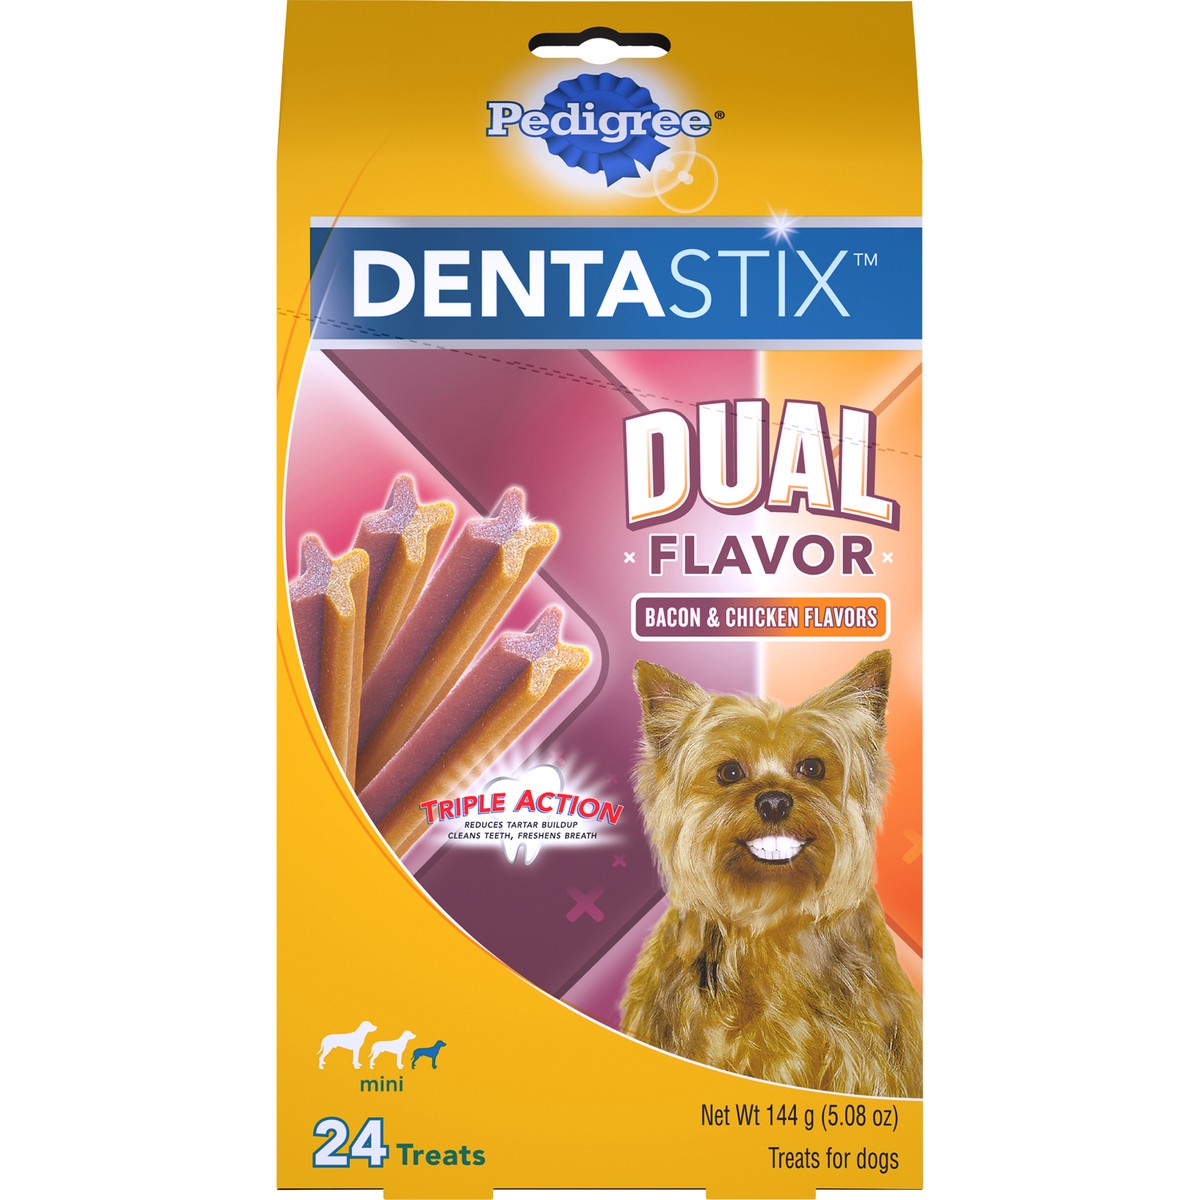 slide 14 of 14, Pedigree Dentastix Dual Flavor Bacon & Chicken Flavors Mini Treats for Dogs 5.08 oz. Box, 5.08 oz